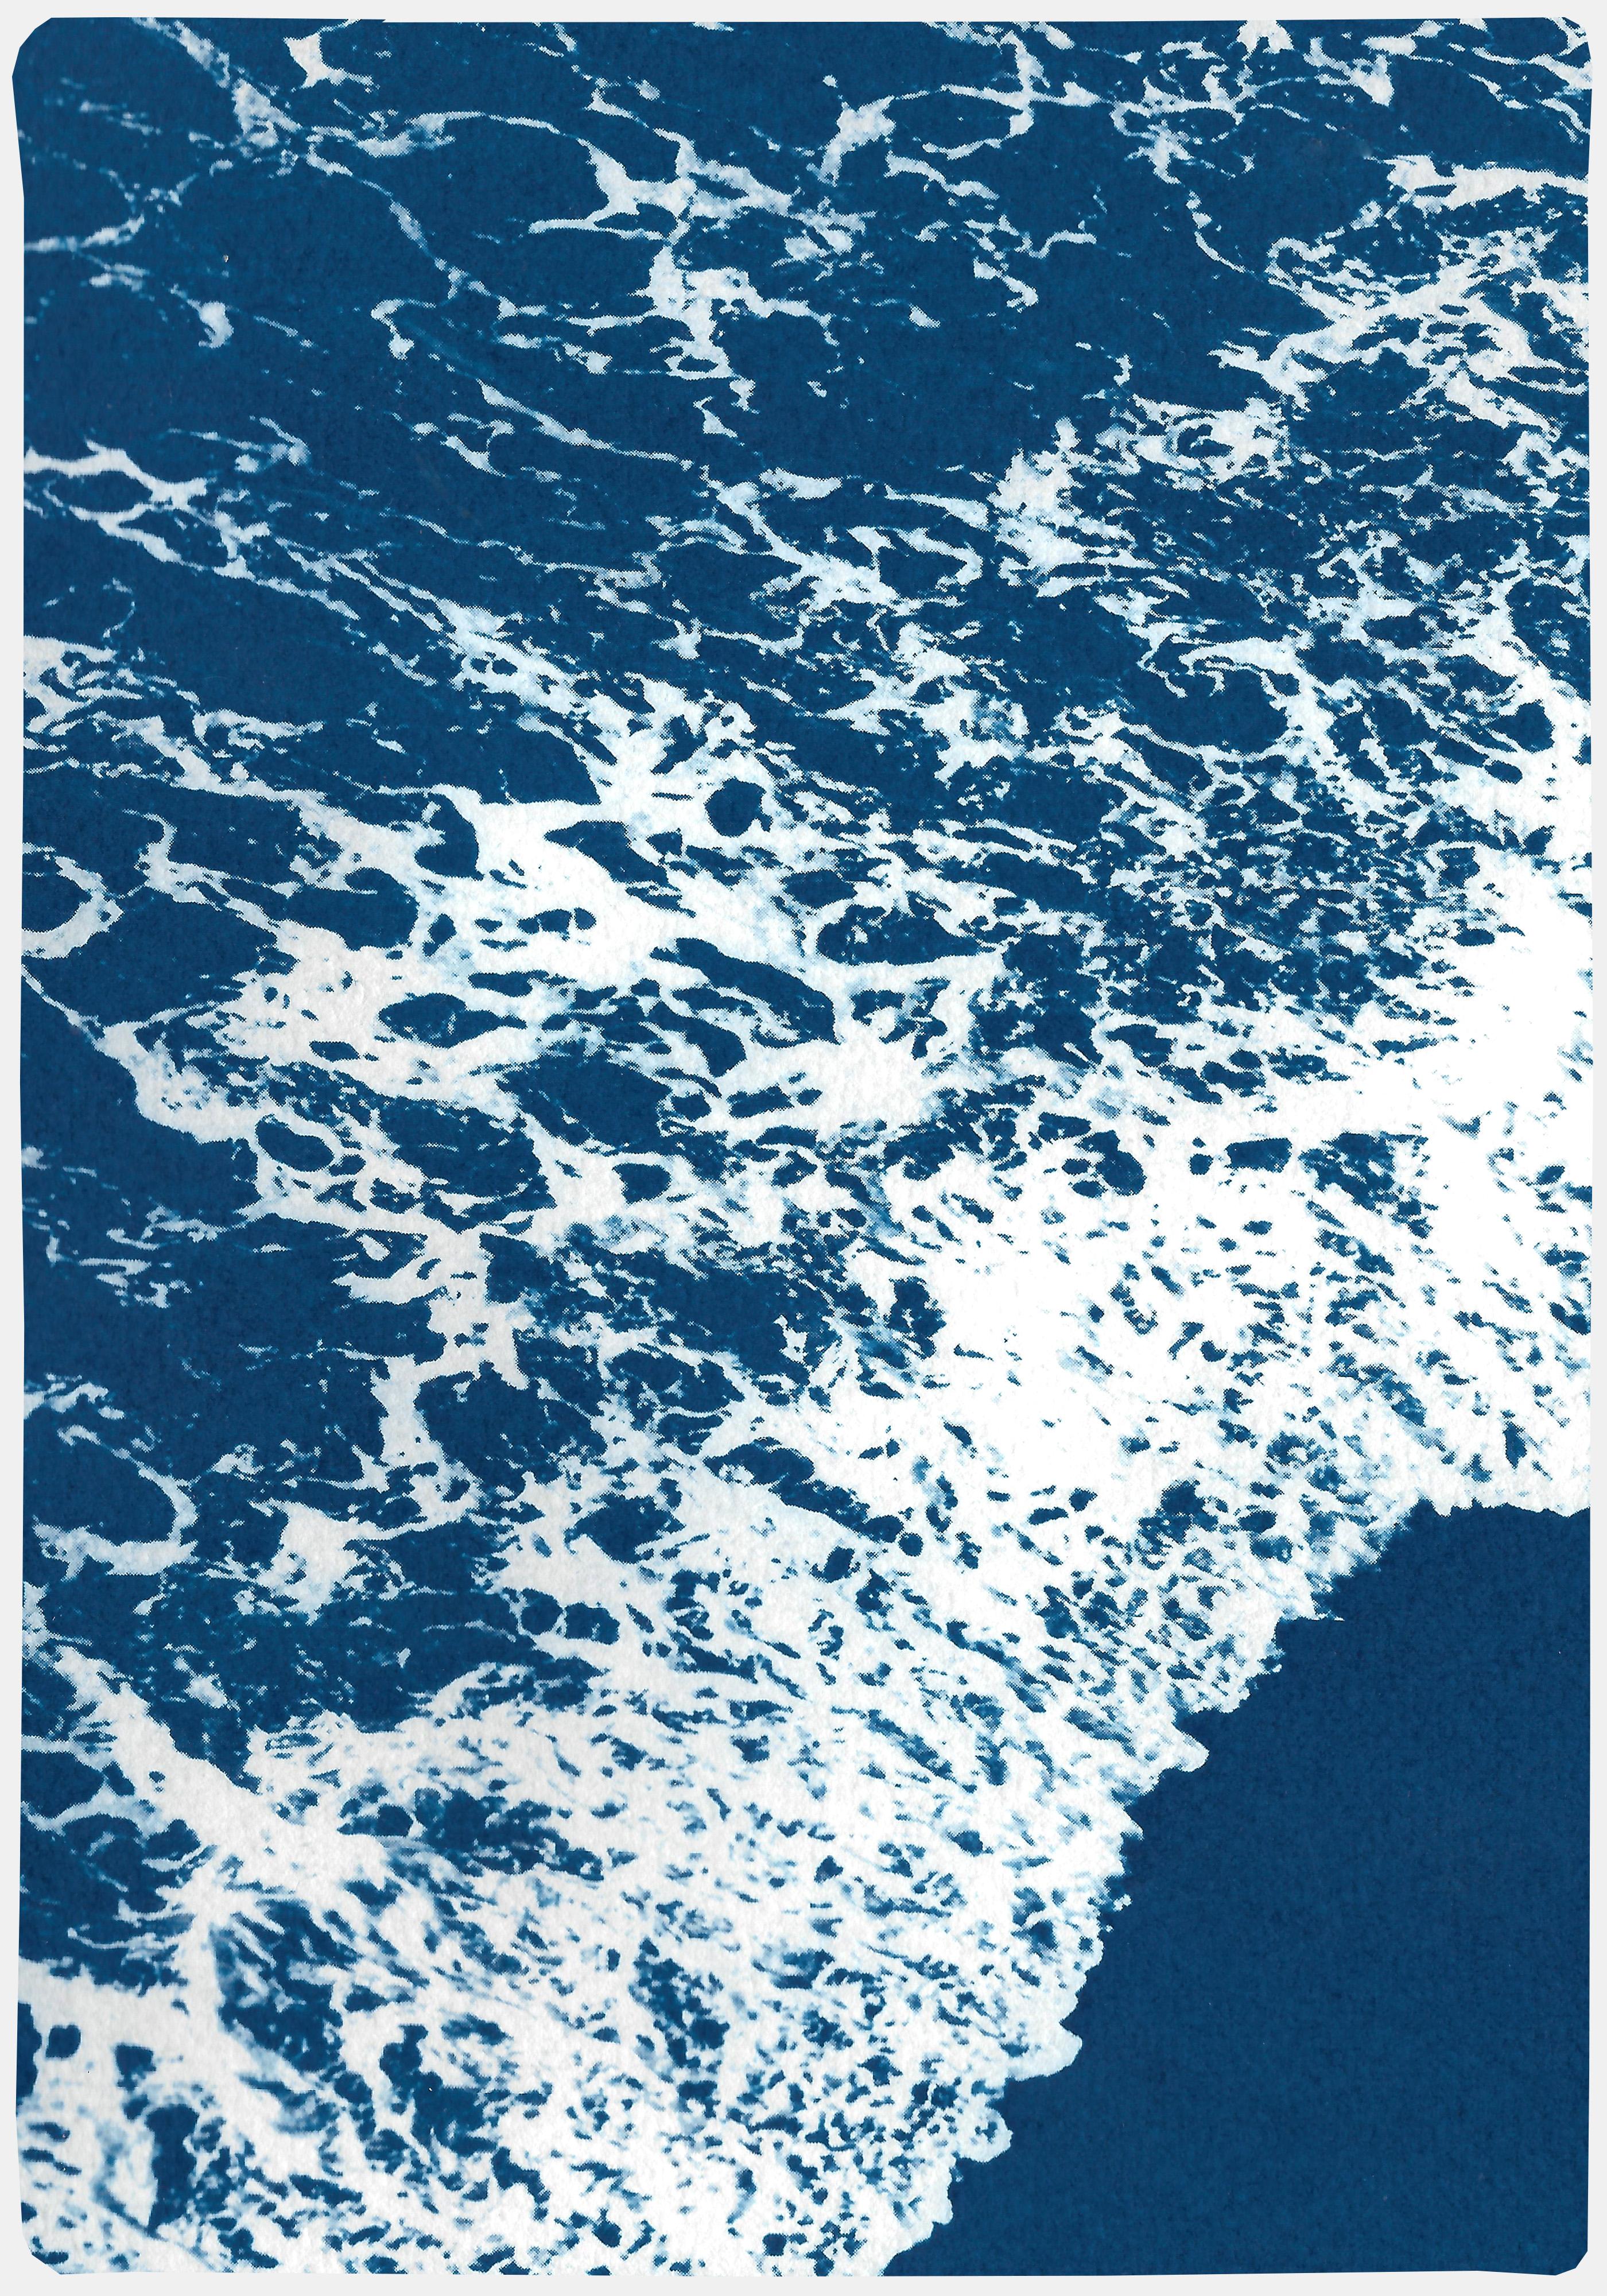 Diptyque nautique de sable bleu profond, cyanotype original, paysage marin envoûtant - Minimaliste Art par Kind of Cyan